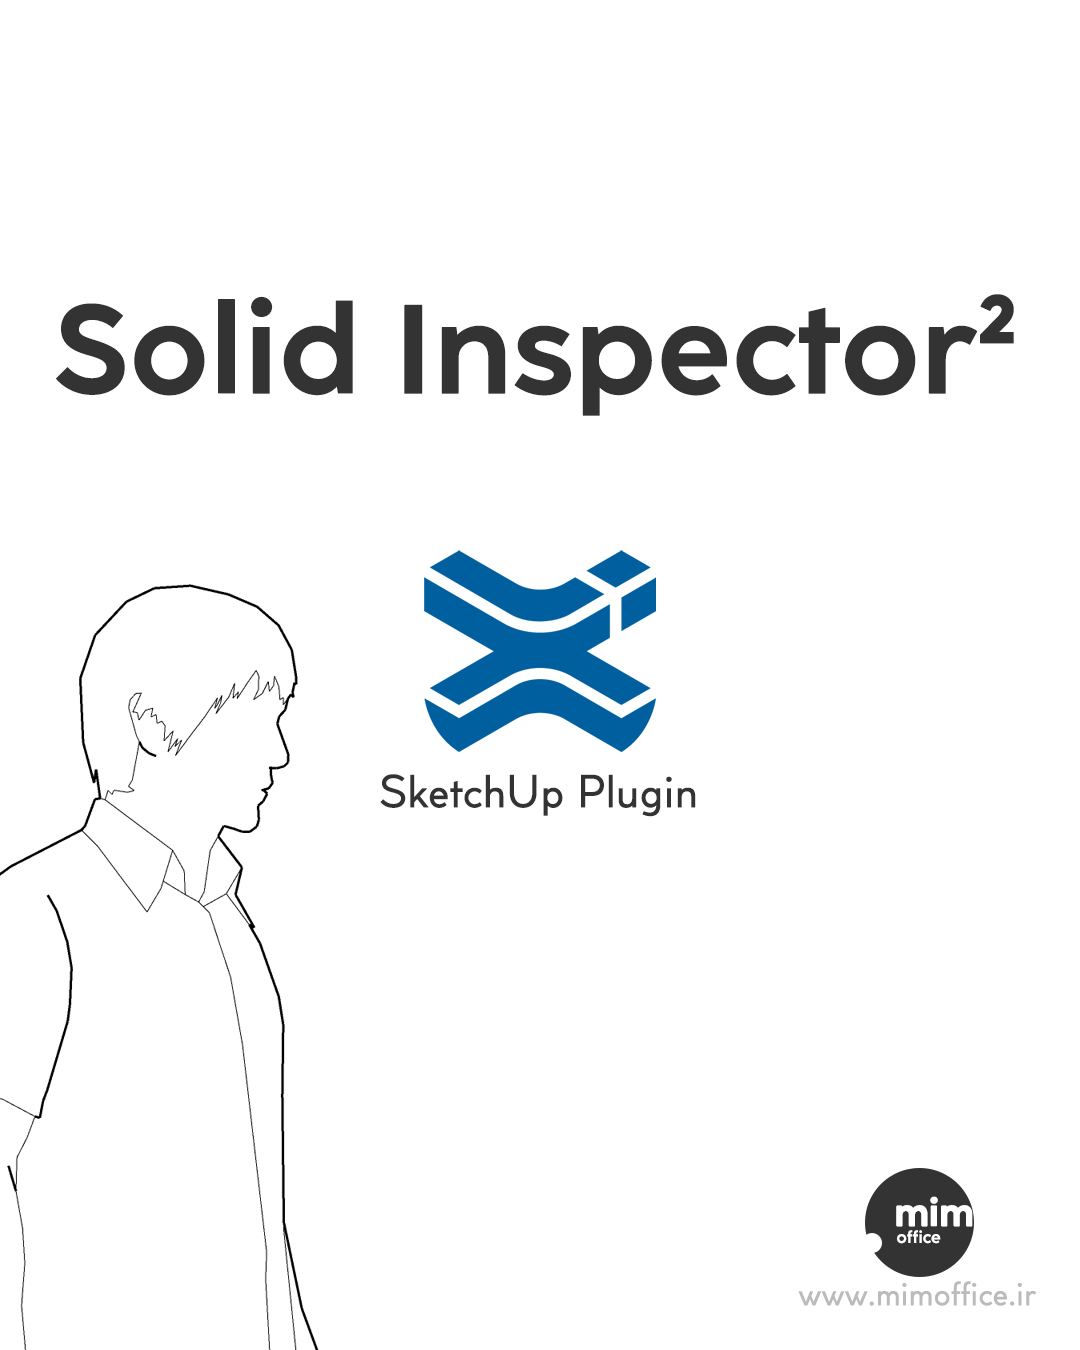 Solid Inspector²